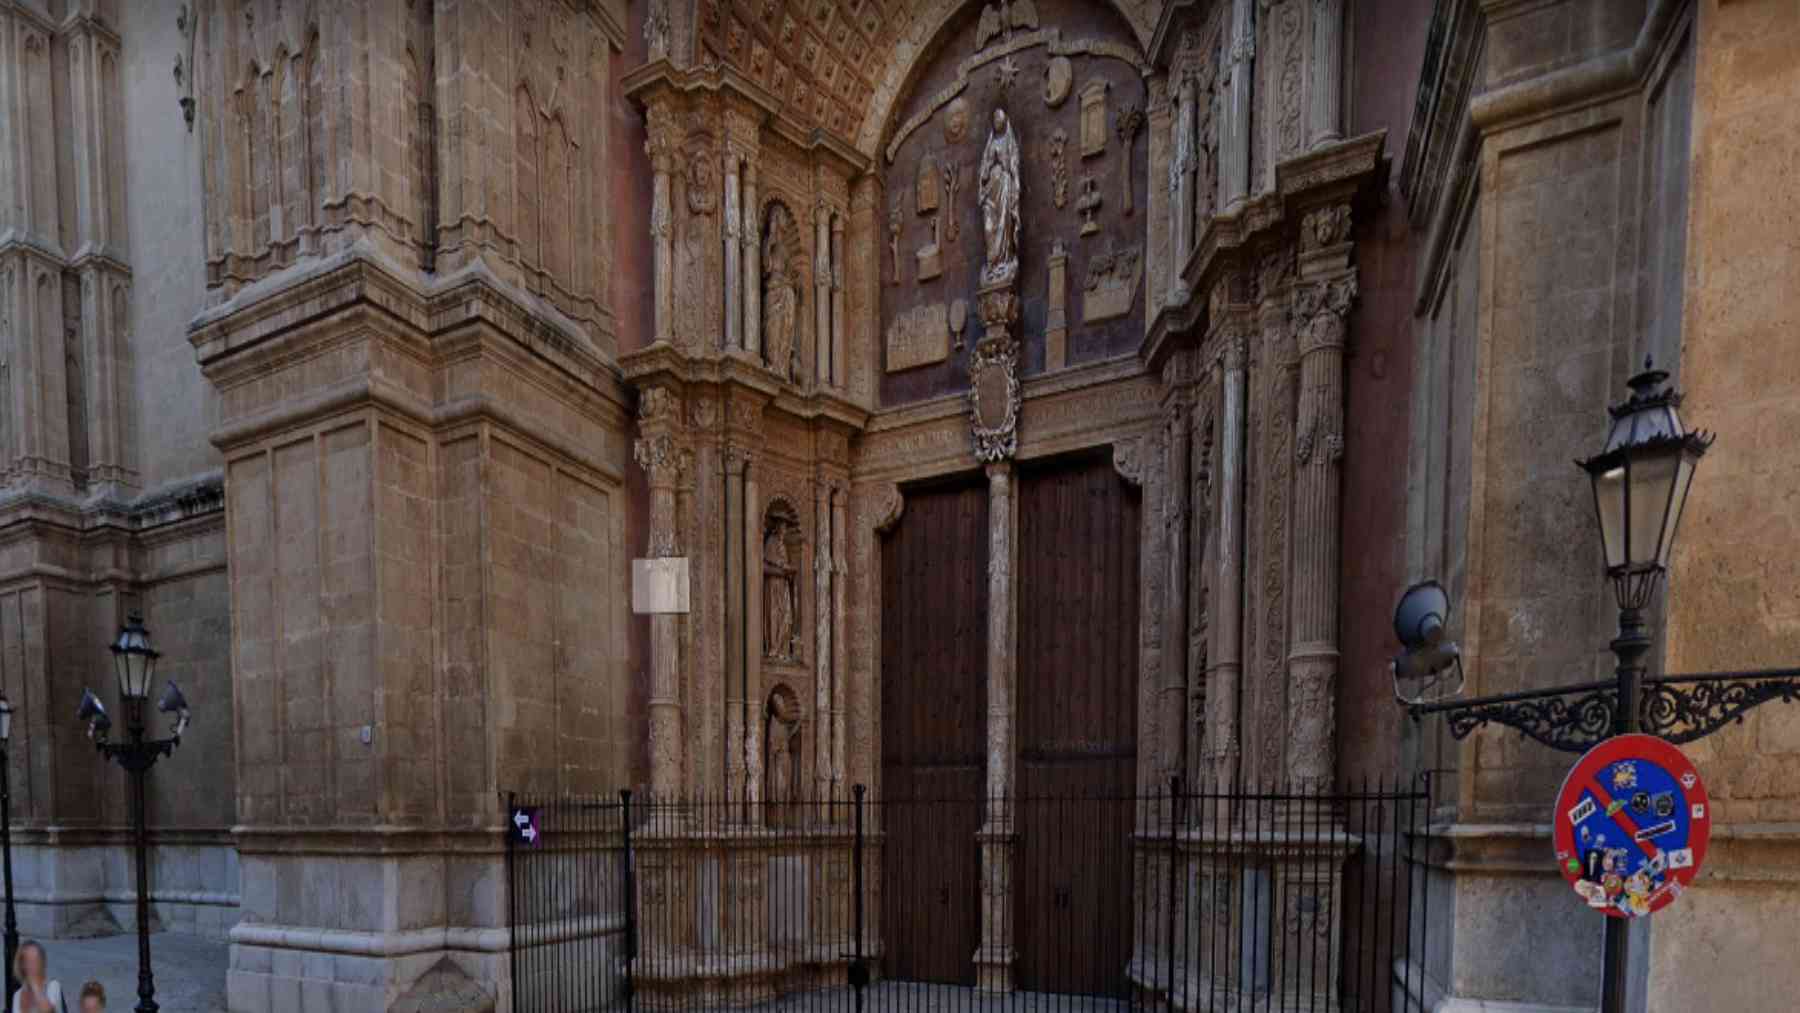 Imagen de la entrada principal a la Catedral de Palma.